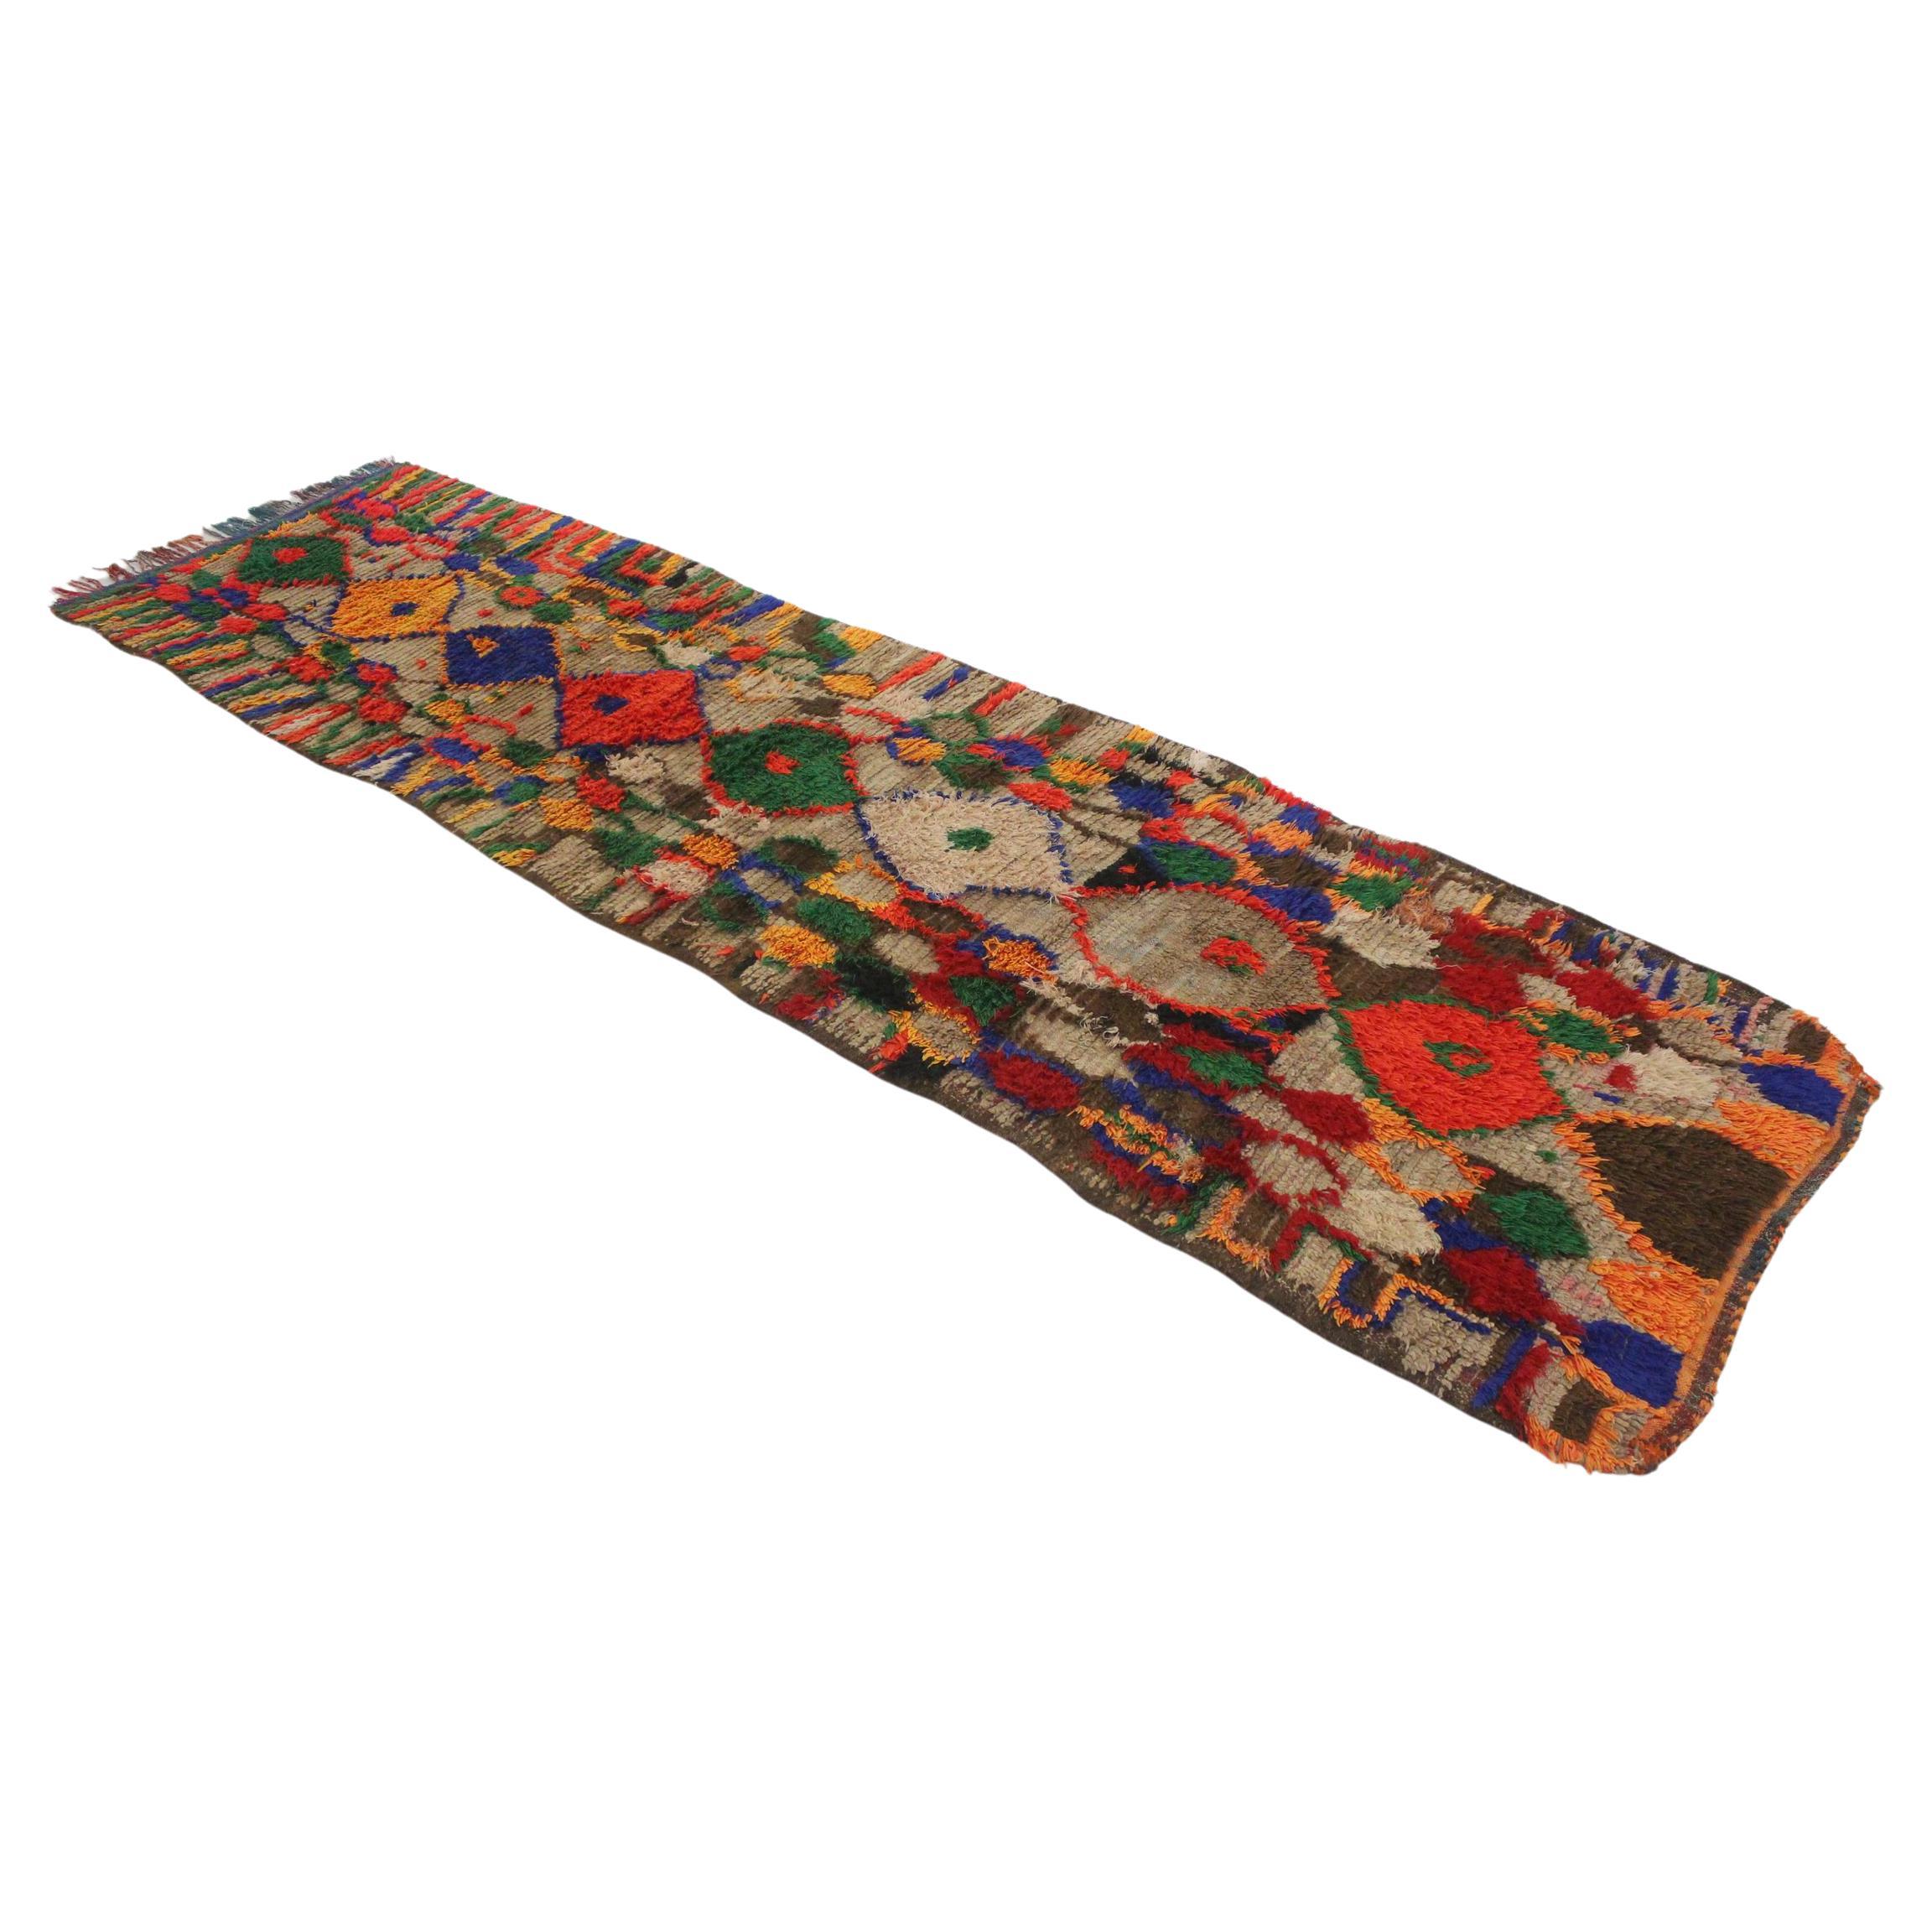 Vintage Moroccan Boujad runner rug - Brown/multicolor - 3.6x12.3feet / 109x377cm